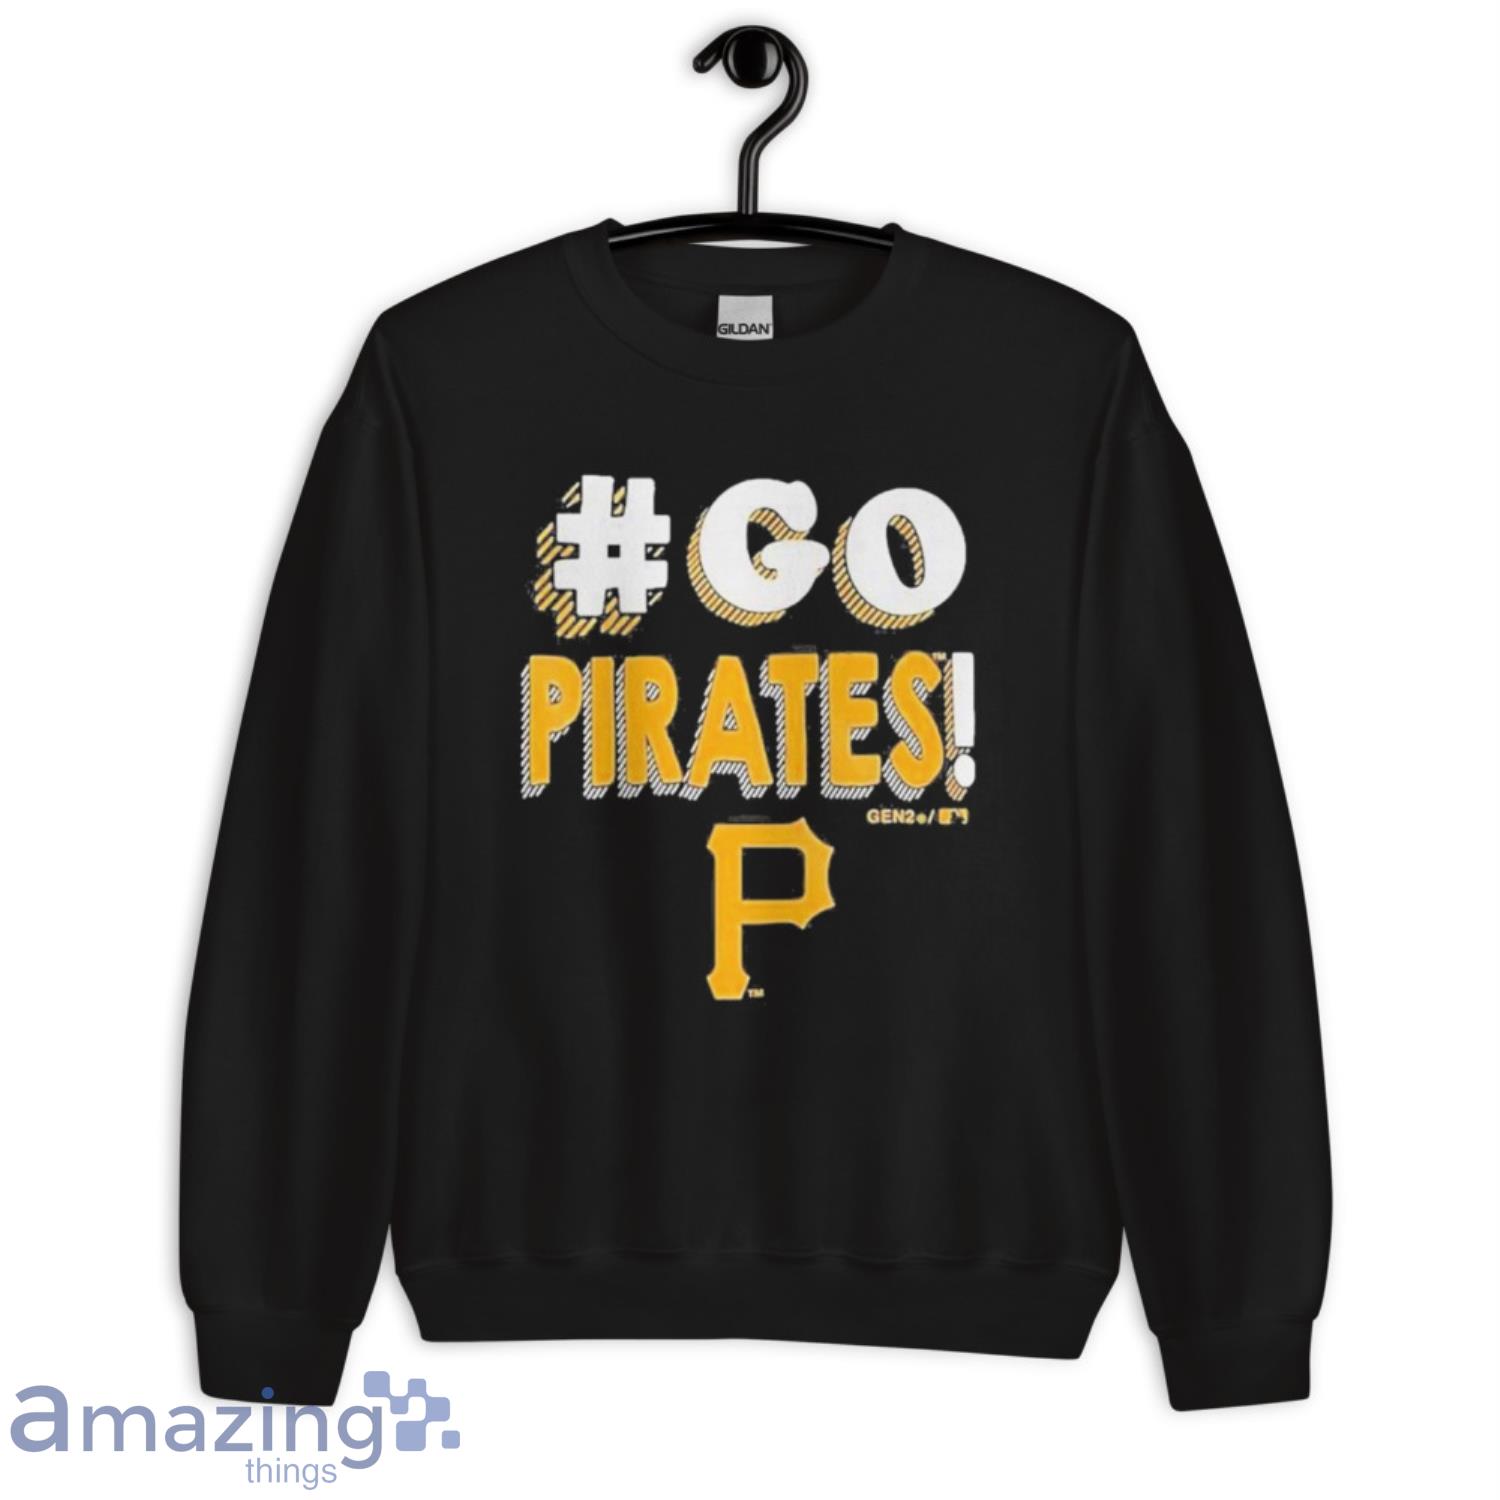 Youth Stitches Black/White Pittsburgh Pirates Team T-Shirt Combo Set